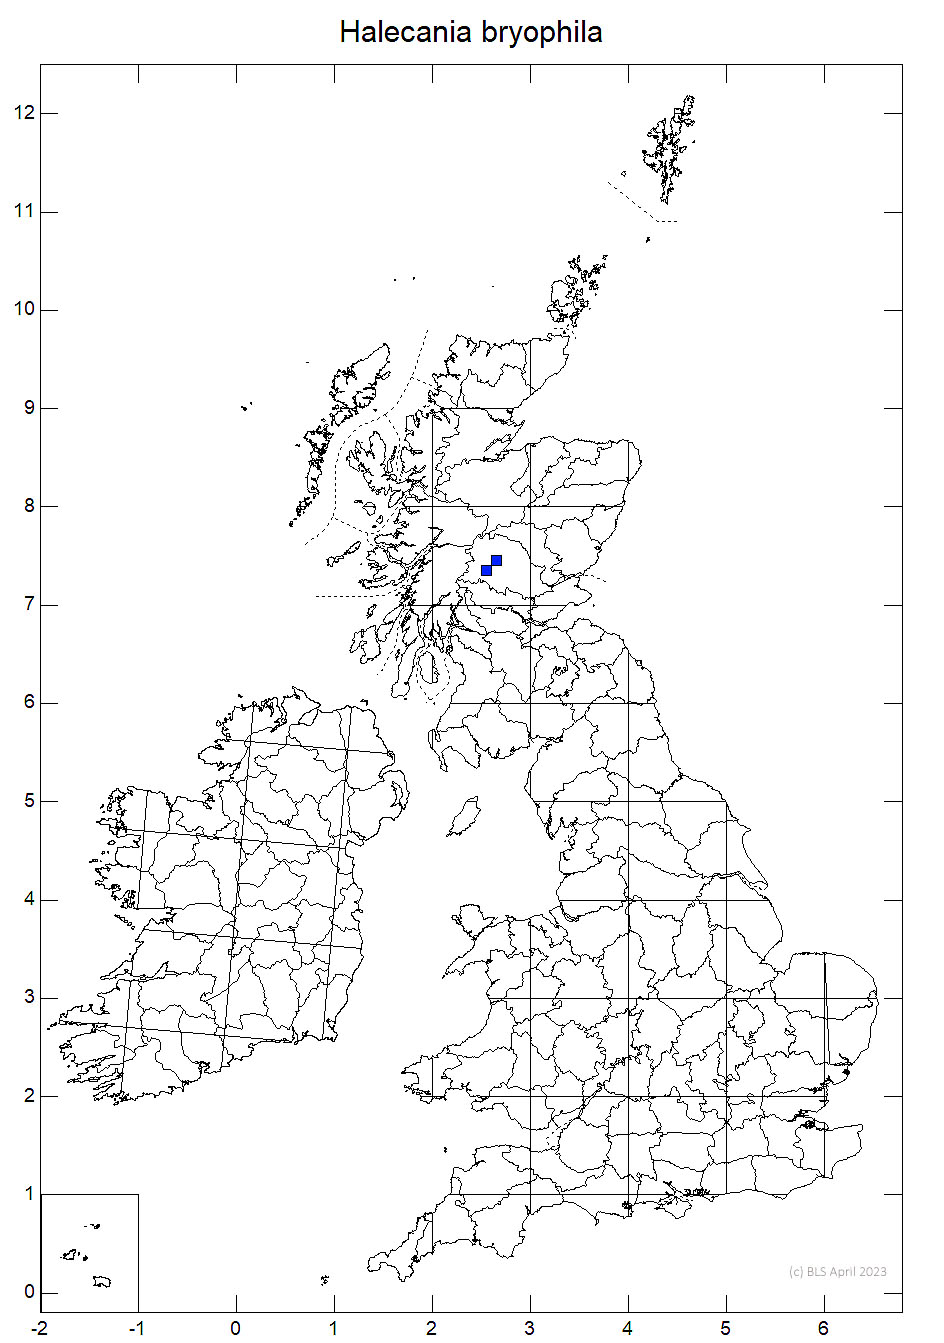 Halecania bryophila 10km sq distribution map